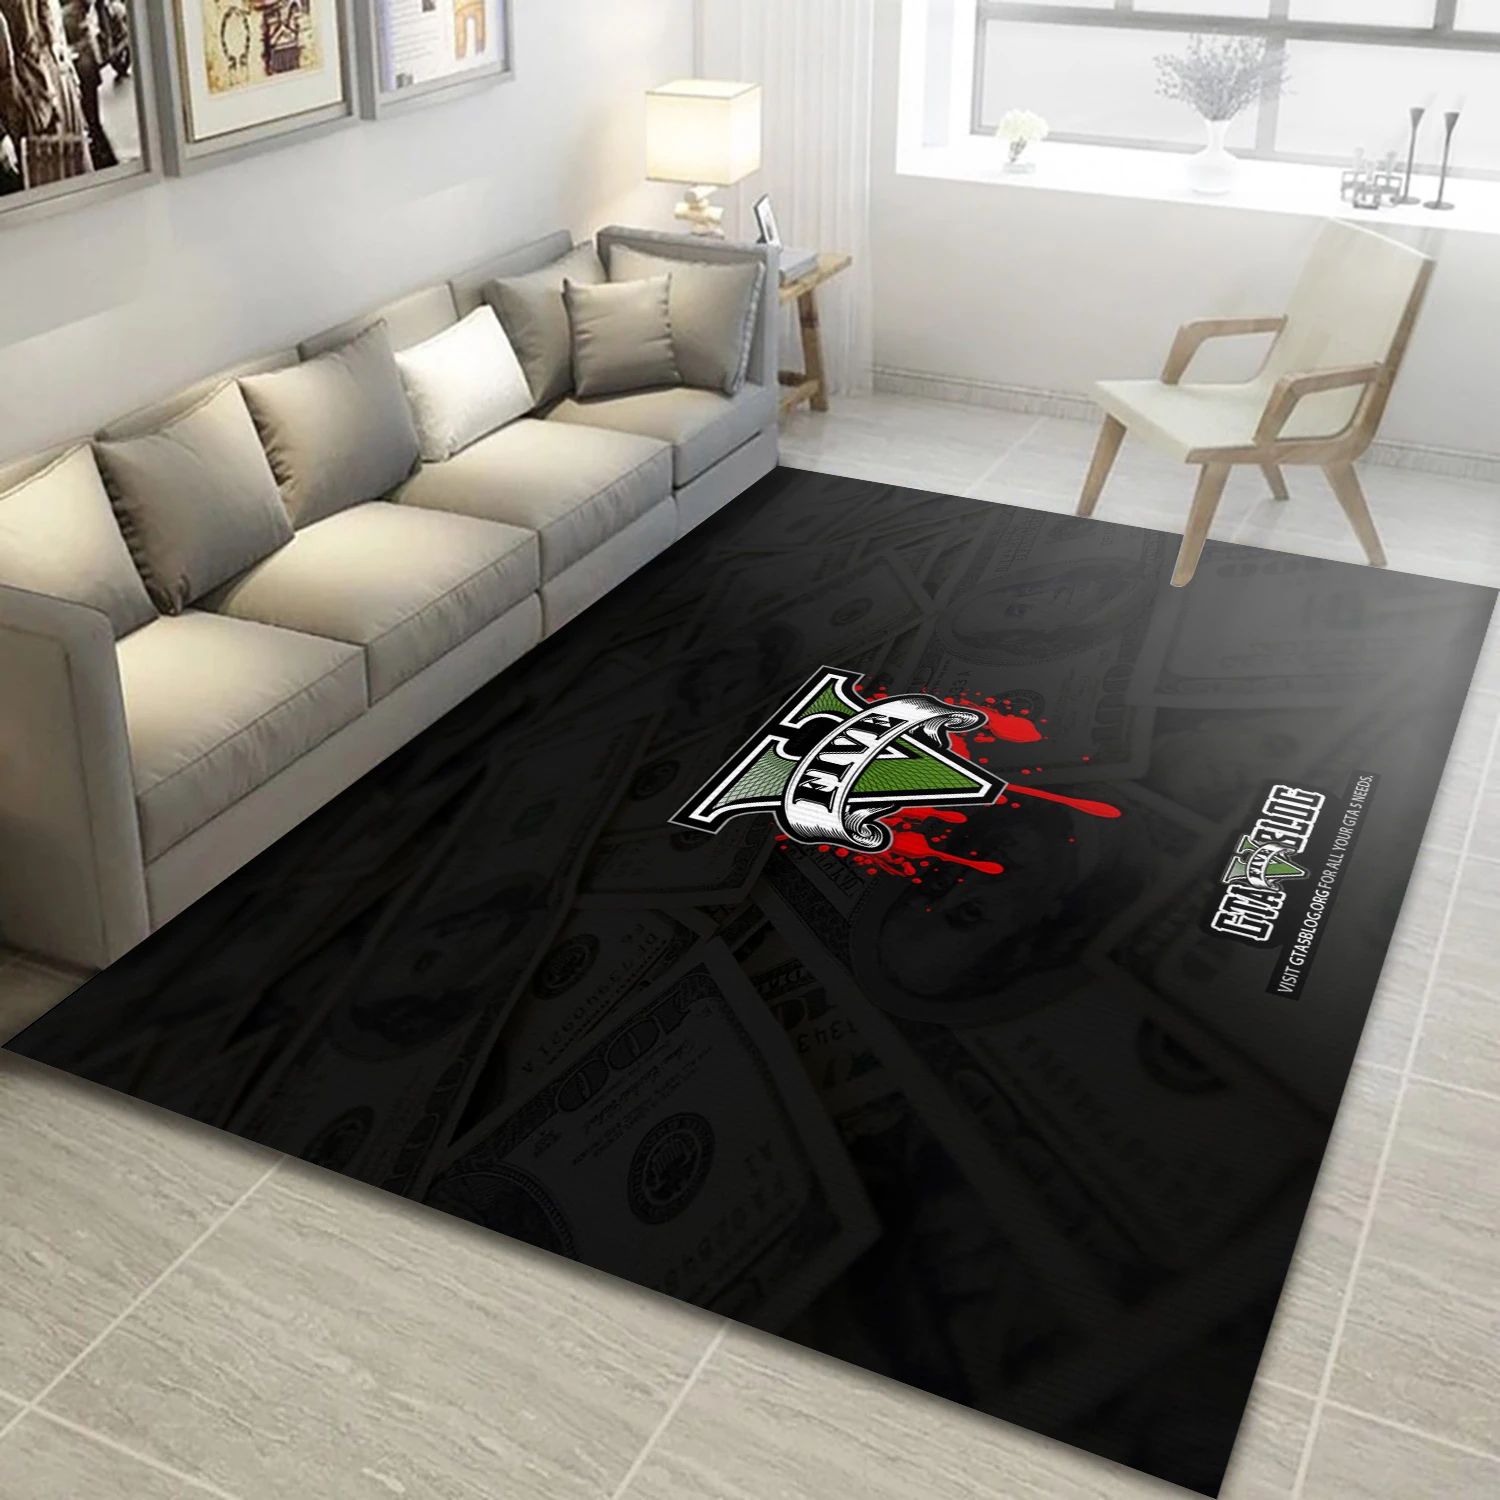 Grand Theft Auto 5 Video Game Area Rug Area, Bedroom Rug - Home Decor Floor Decor - Indoor Outdoor Rugs